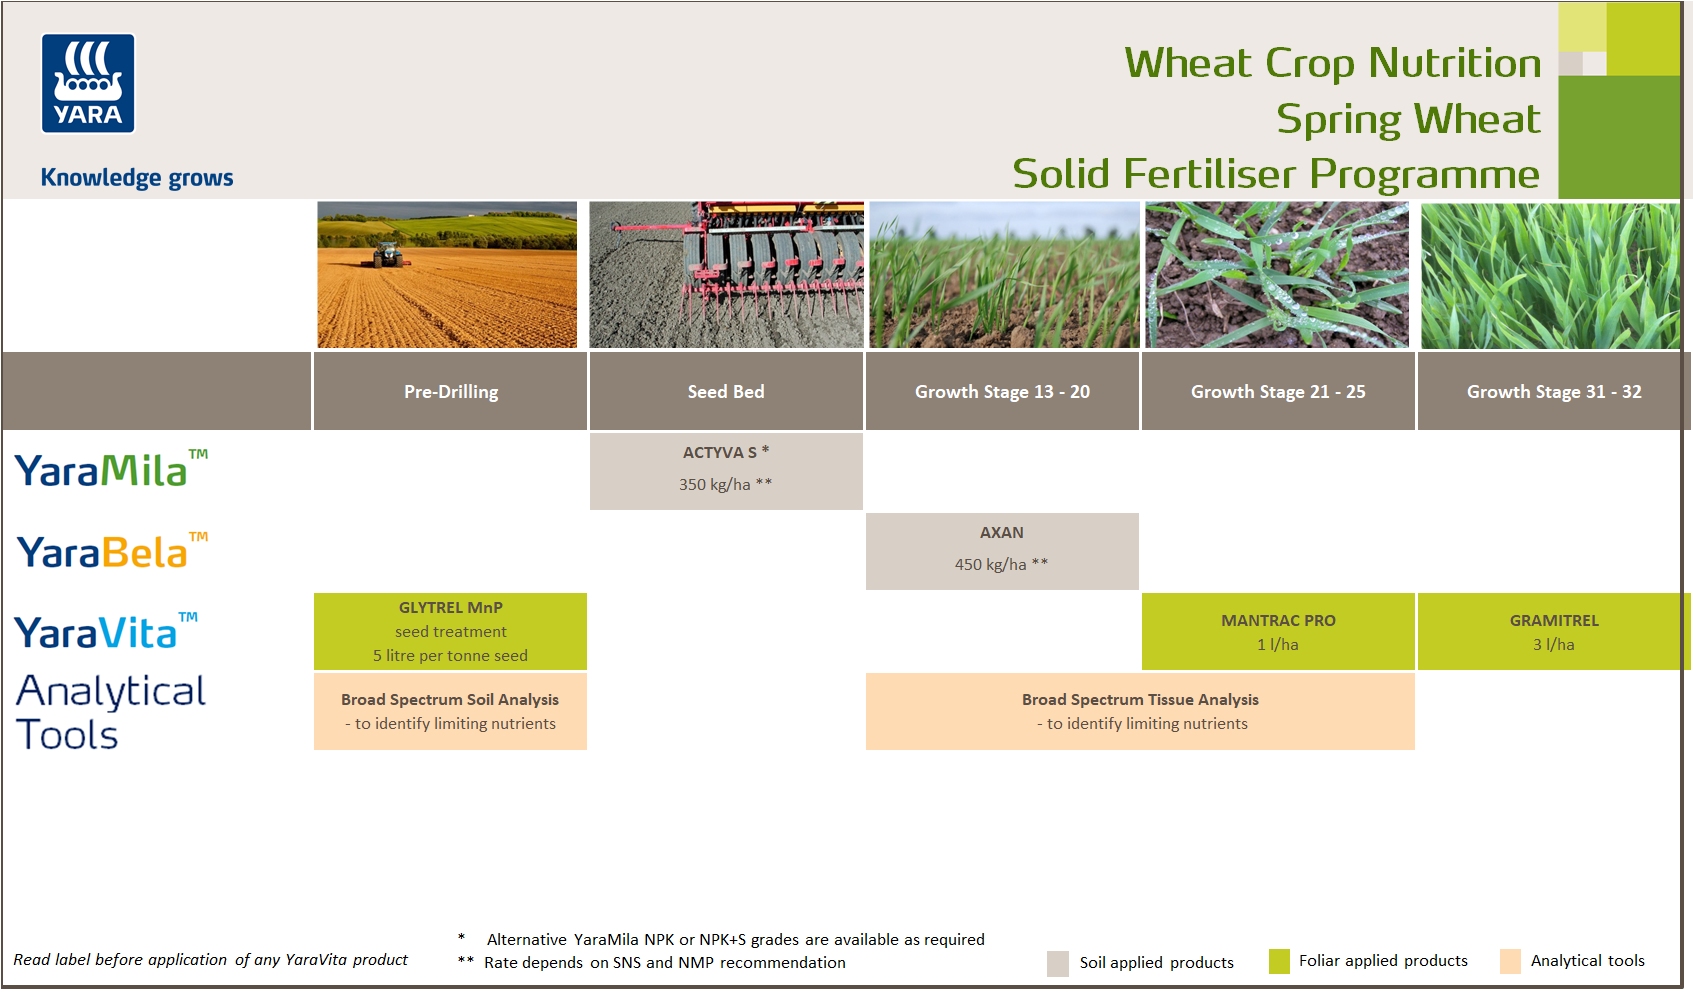 Spring wheat fertiliser programme